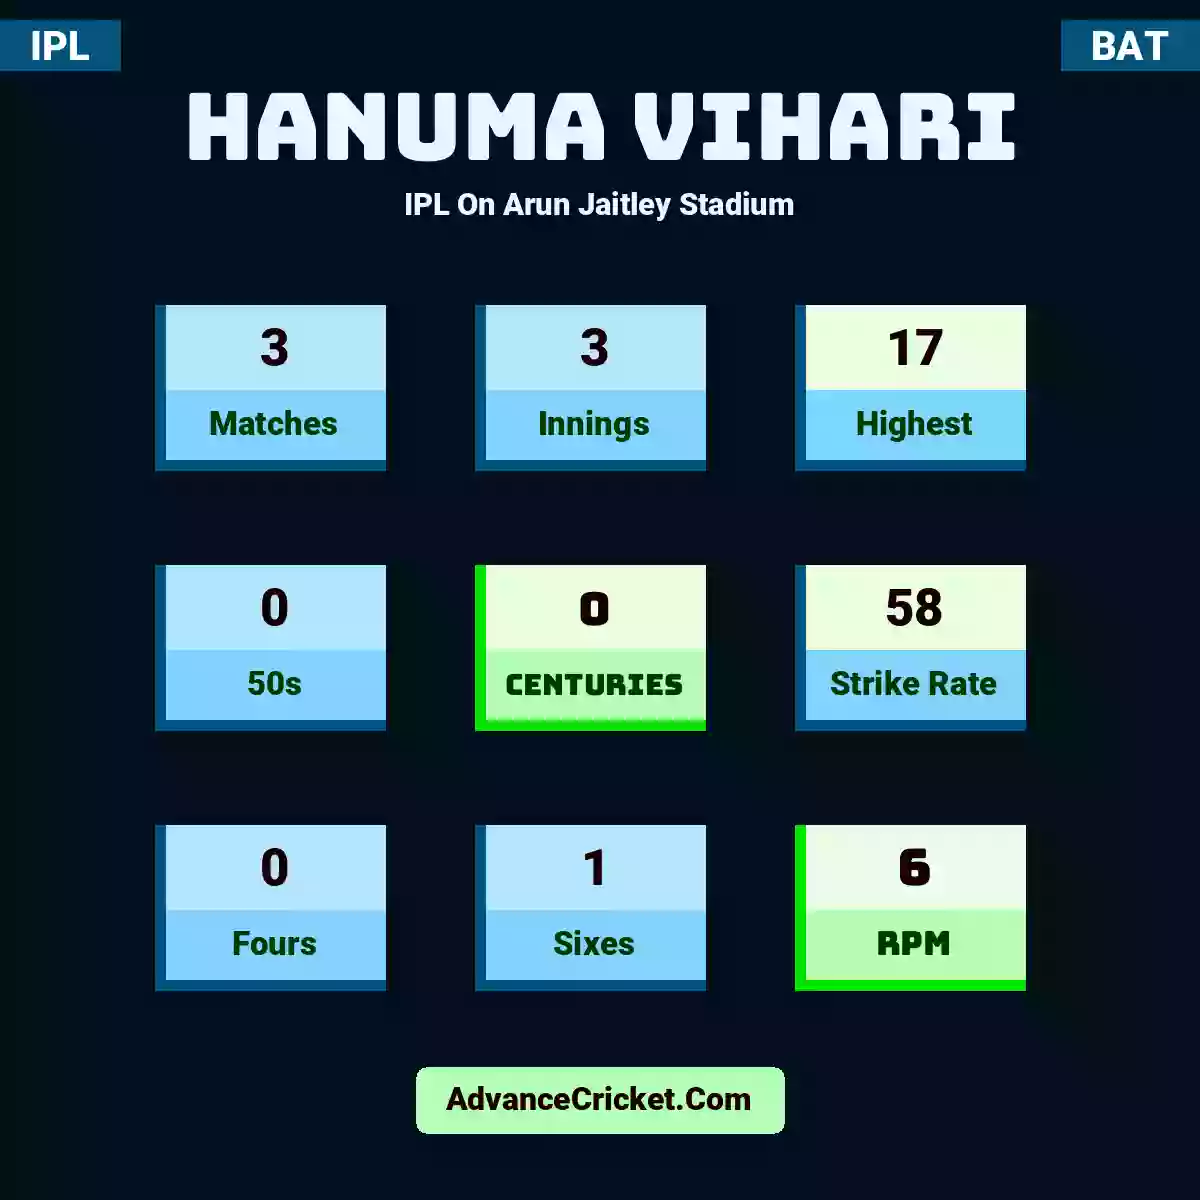 Hanuma Vihari IPL  On Arun Jaitley Stadium, Hanuma Vihari played 3 matches, scored 17 runs as highest, 0 half-centuries, and 0 centuries, with a strike rate of 58. H.Vihari hit 0 fours and 1 sixes, with an RPM of 6.